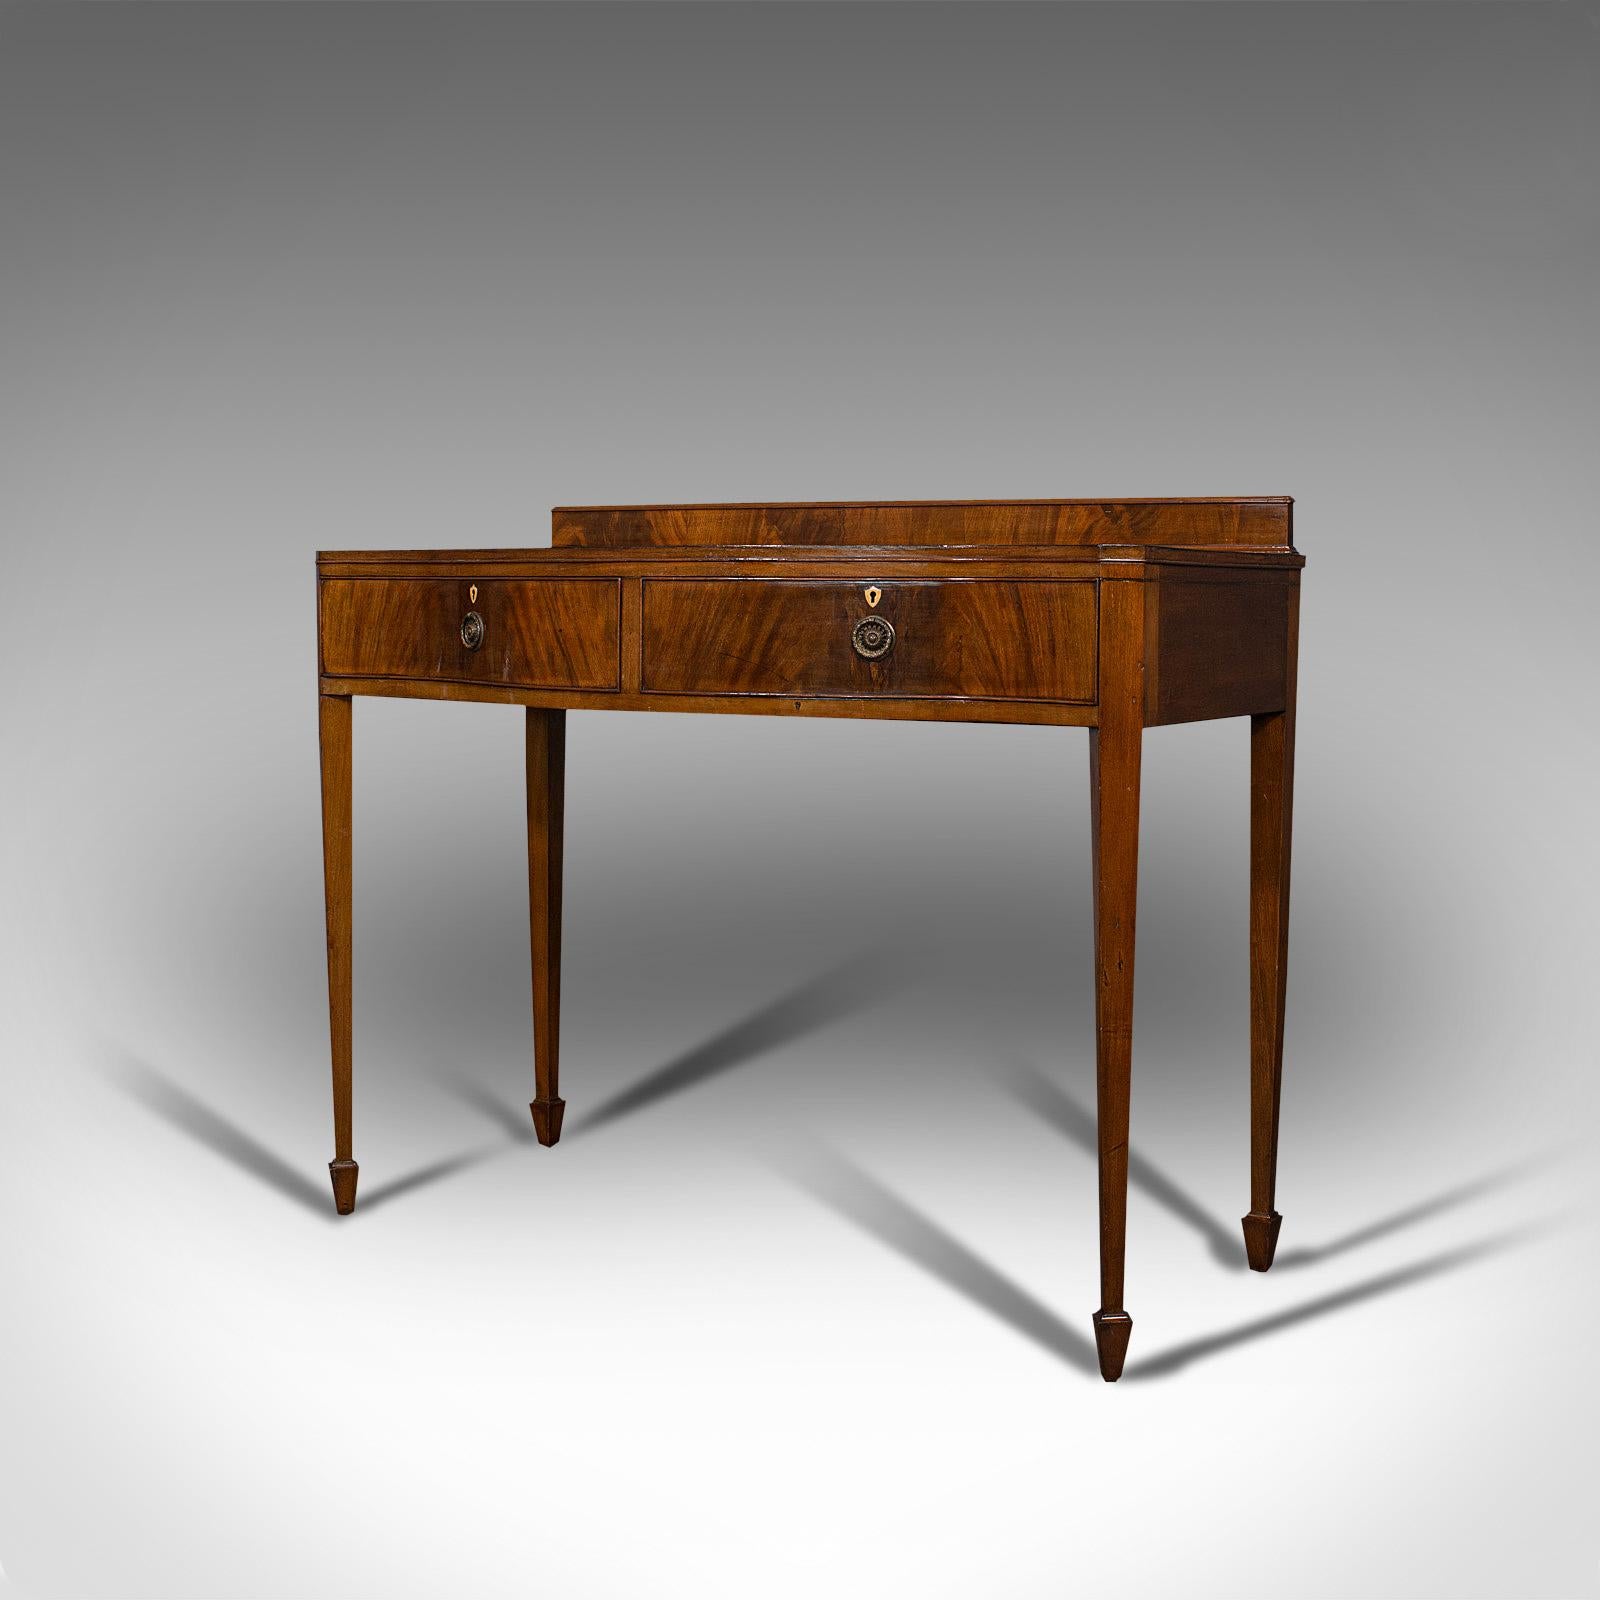 British Antique Side Table, English, Mahogany, Buffet, Server, Hamptons, Edwardian, 1910 For Sale